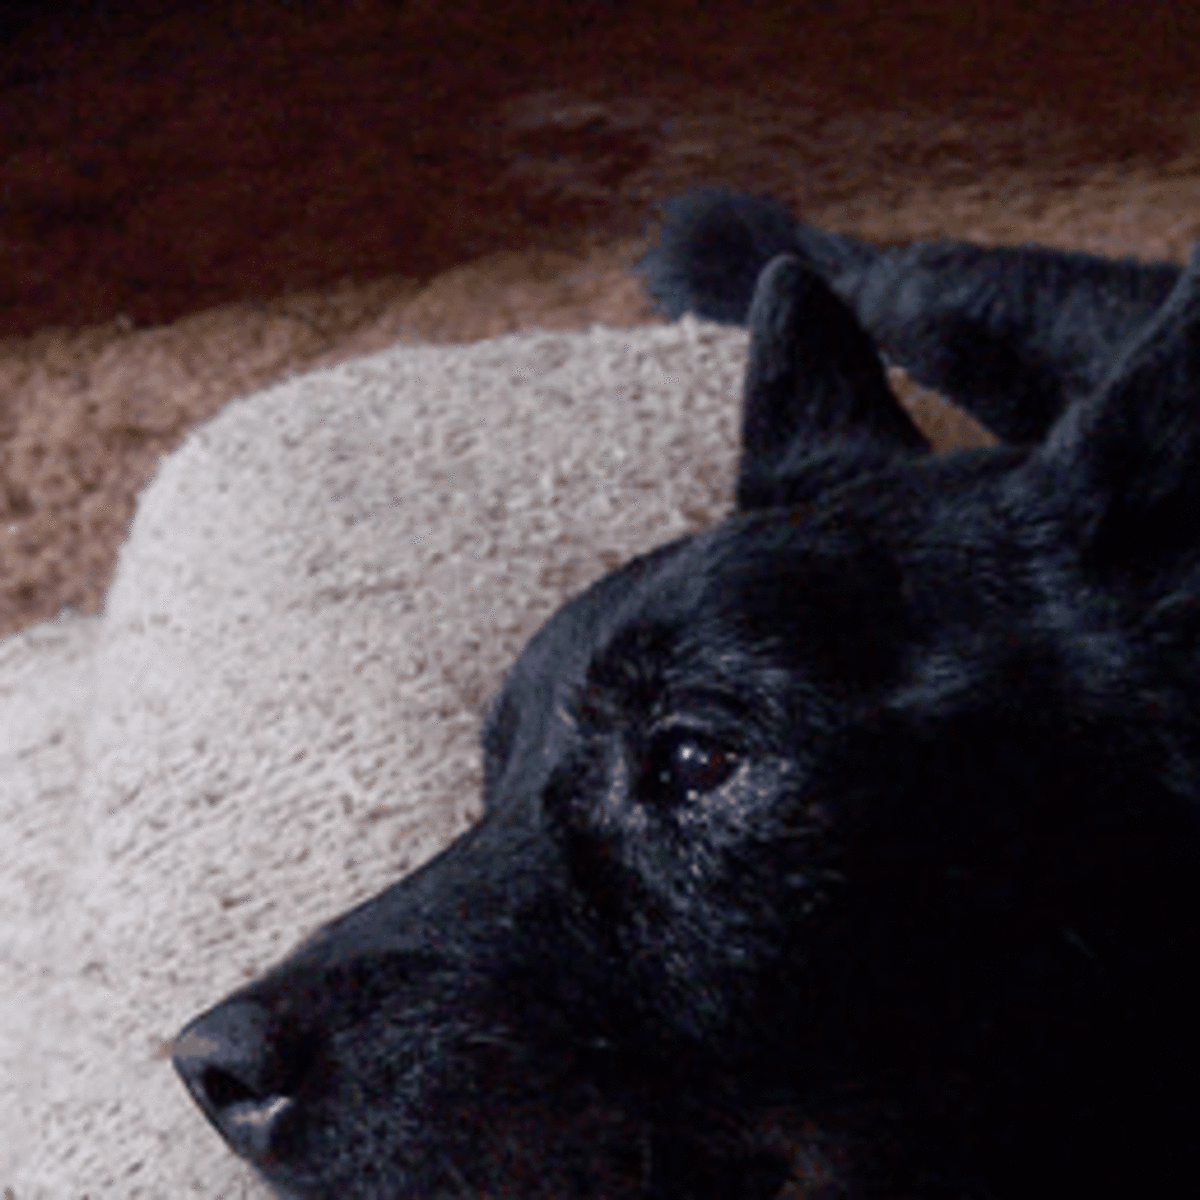 Dog Euthanasia: Putting a Dog to Sleep at Home - PetHelpful